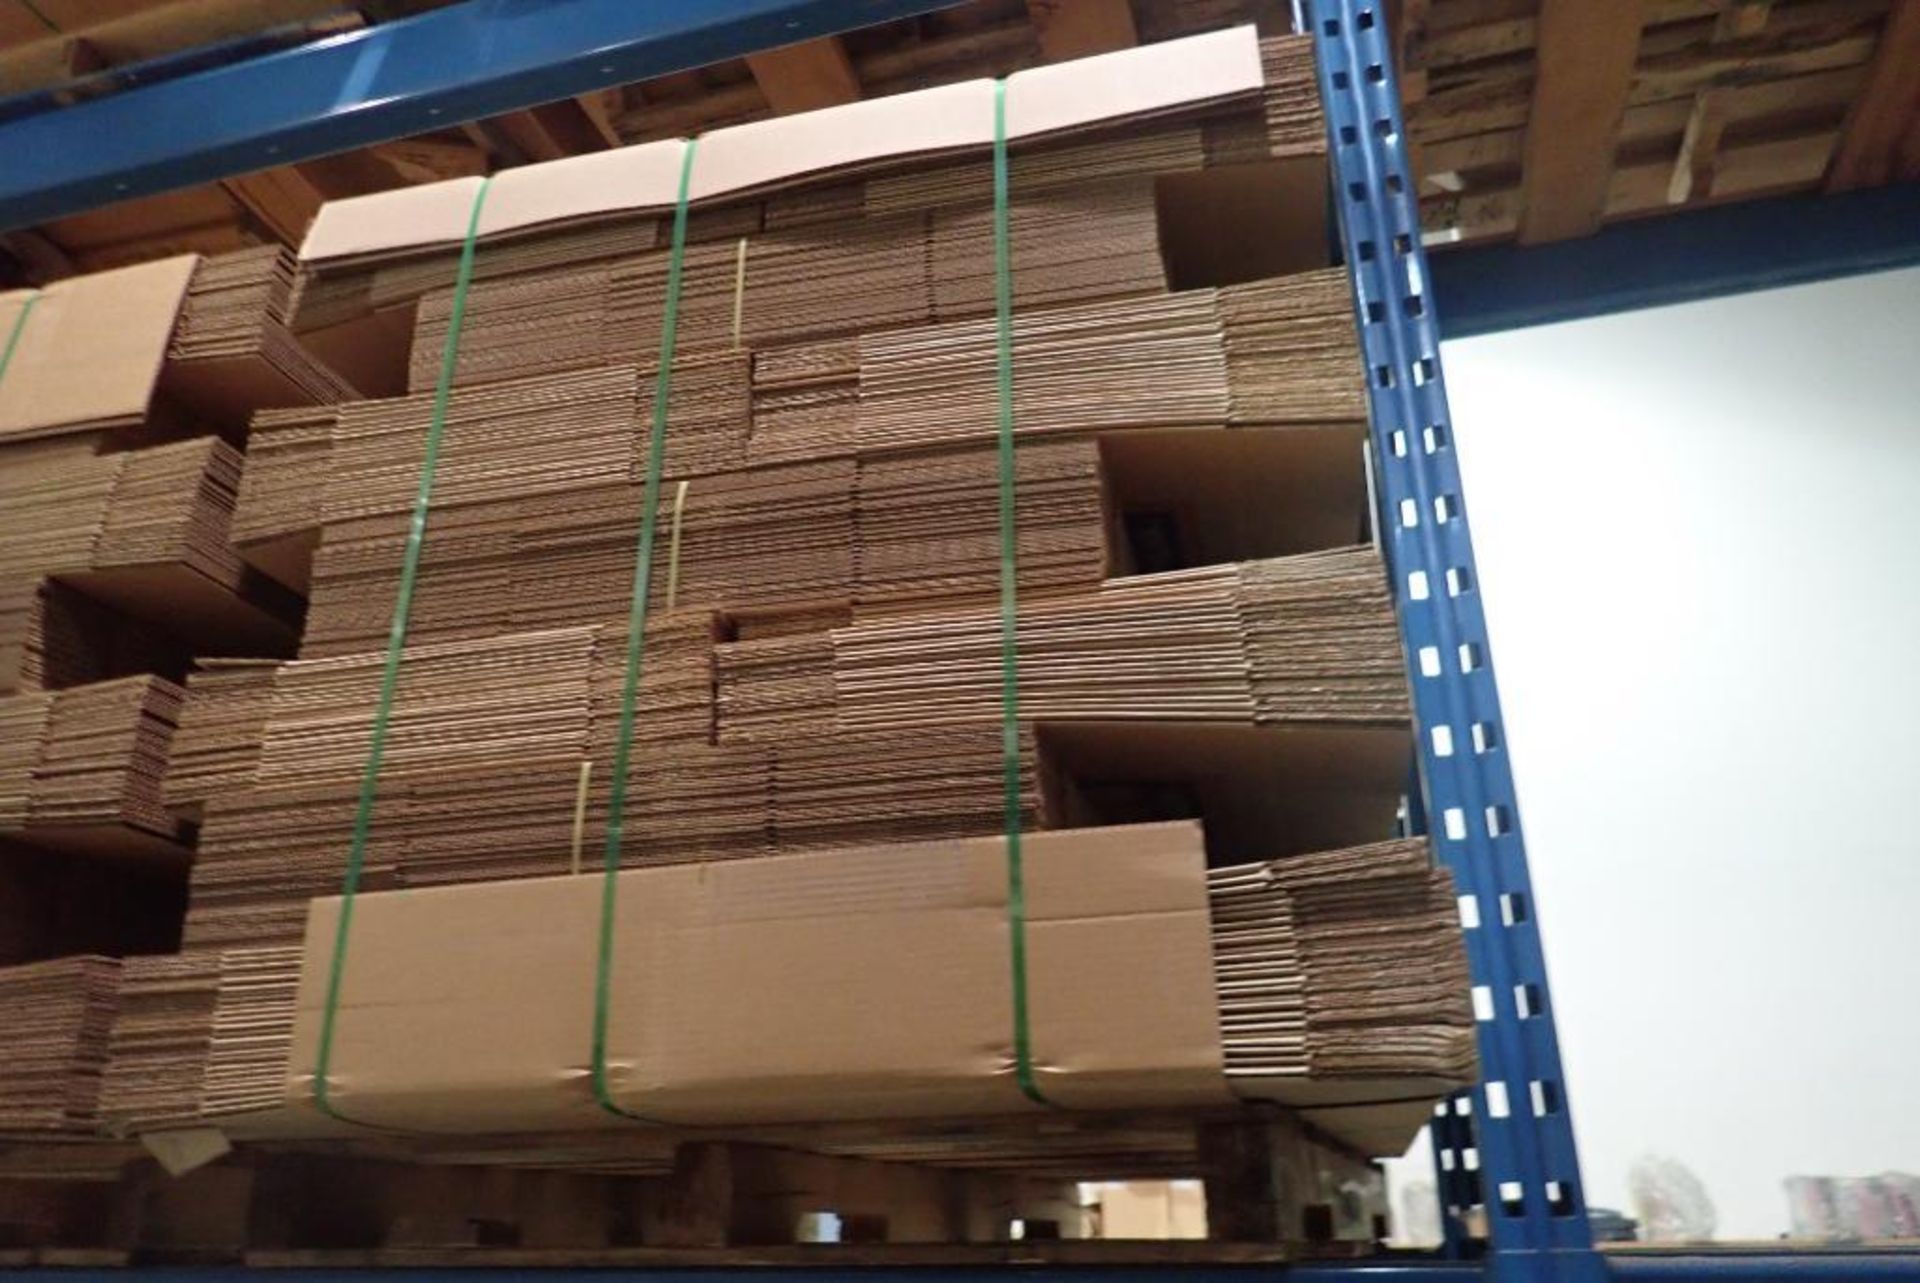 Lot of (7 1/2) Pallets Asst. Cardboard Boxes. - Image 2 of 2